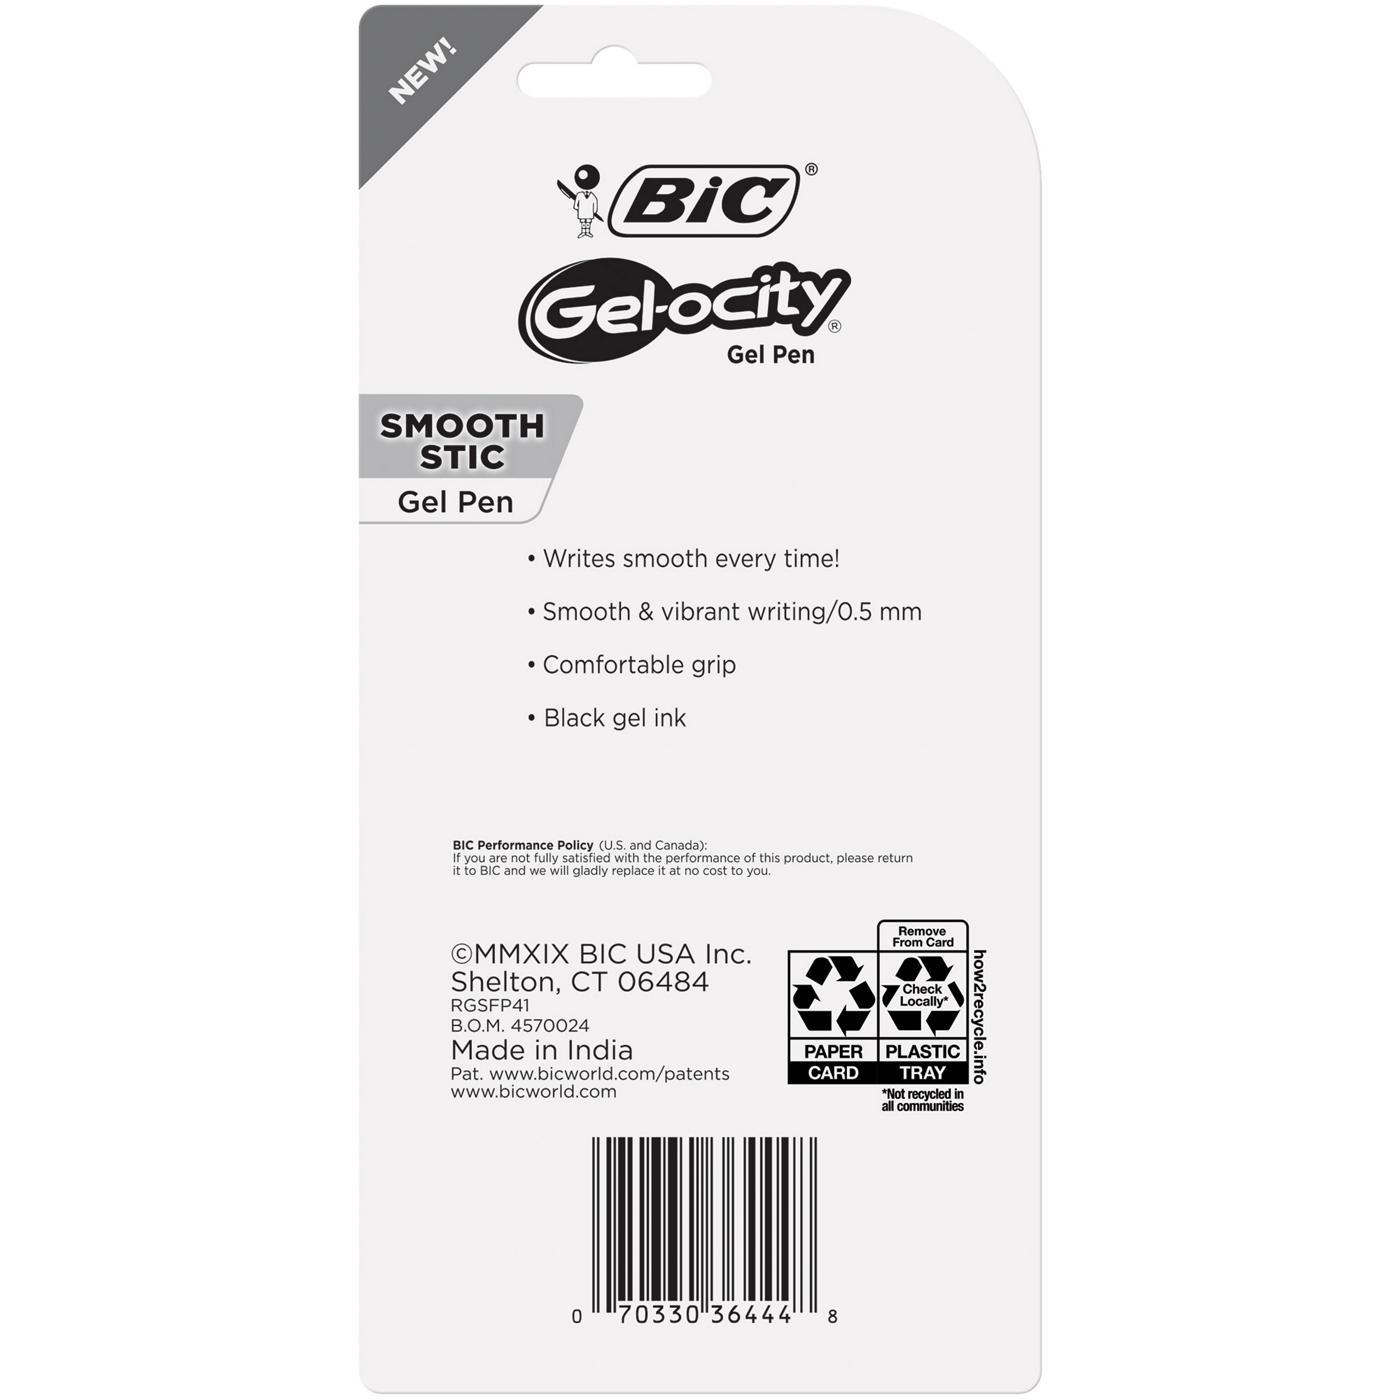 BIC Gel-ocity Smooth Stic 0.5mm Gel Pens - Black Ink; image 2 of 2